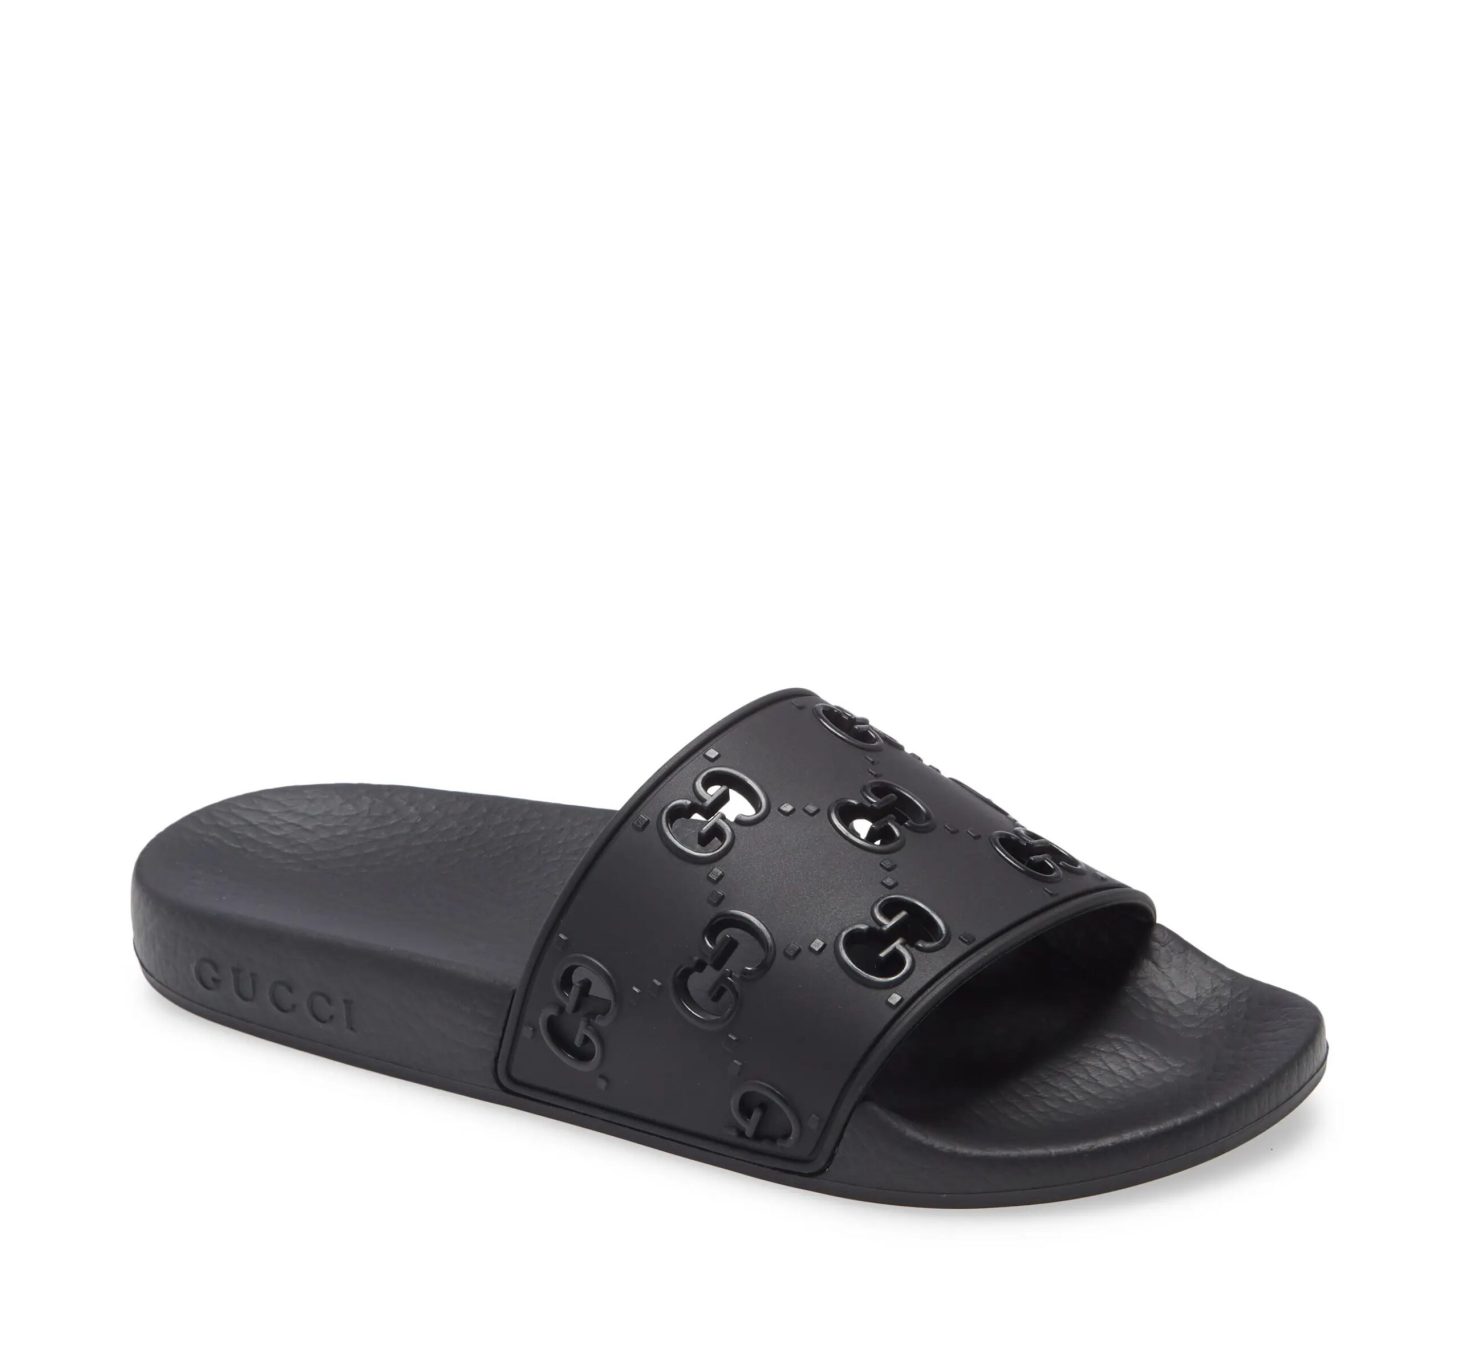 Gucci Rubber GG Slide Sandals, summer slippers